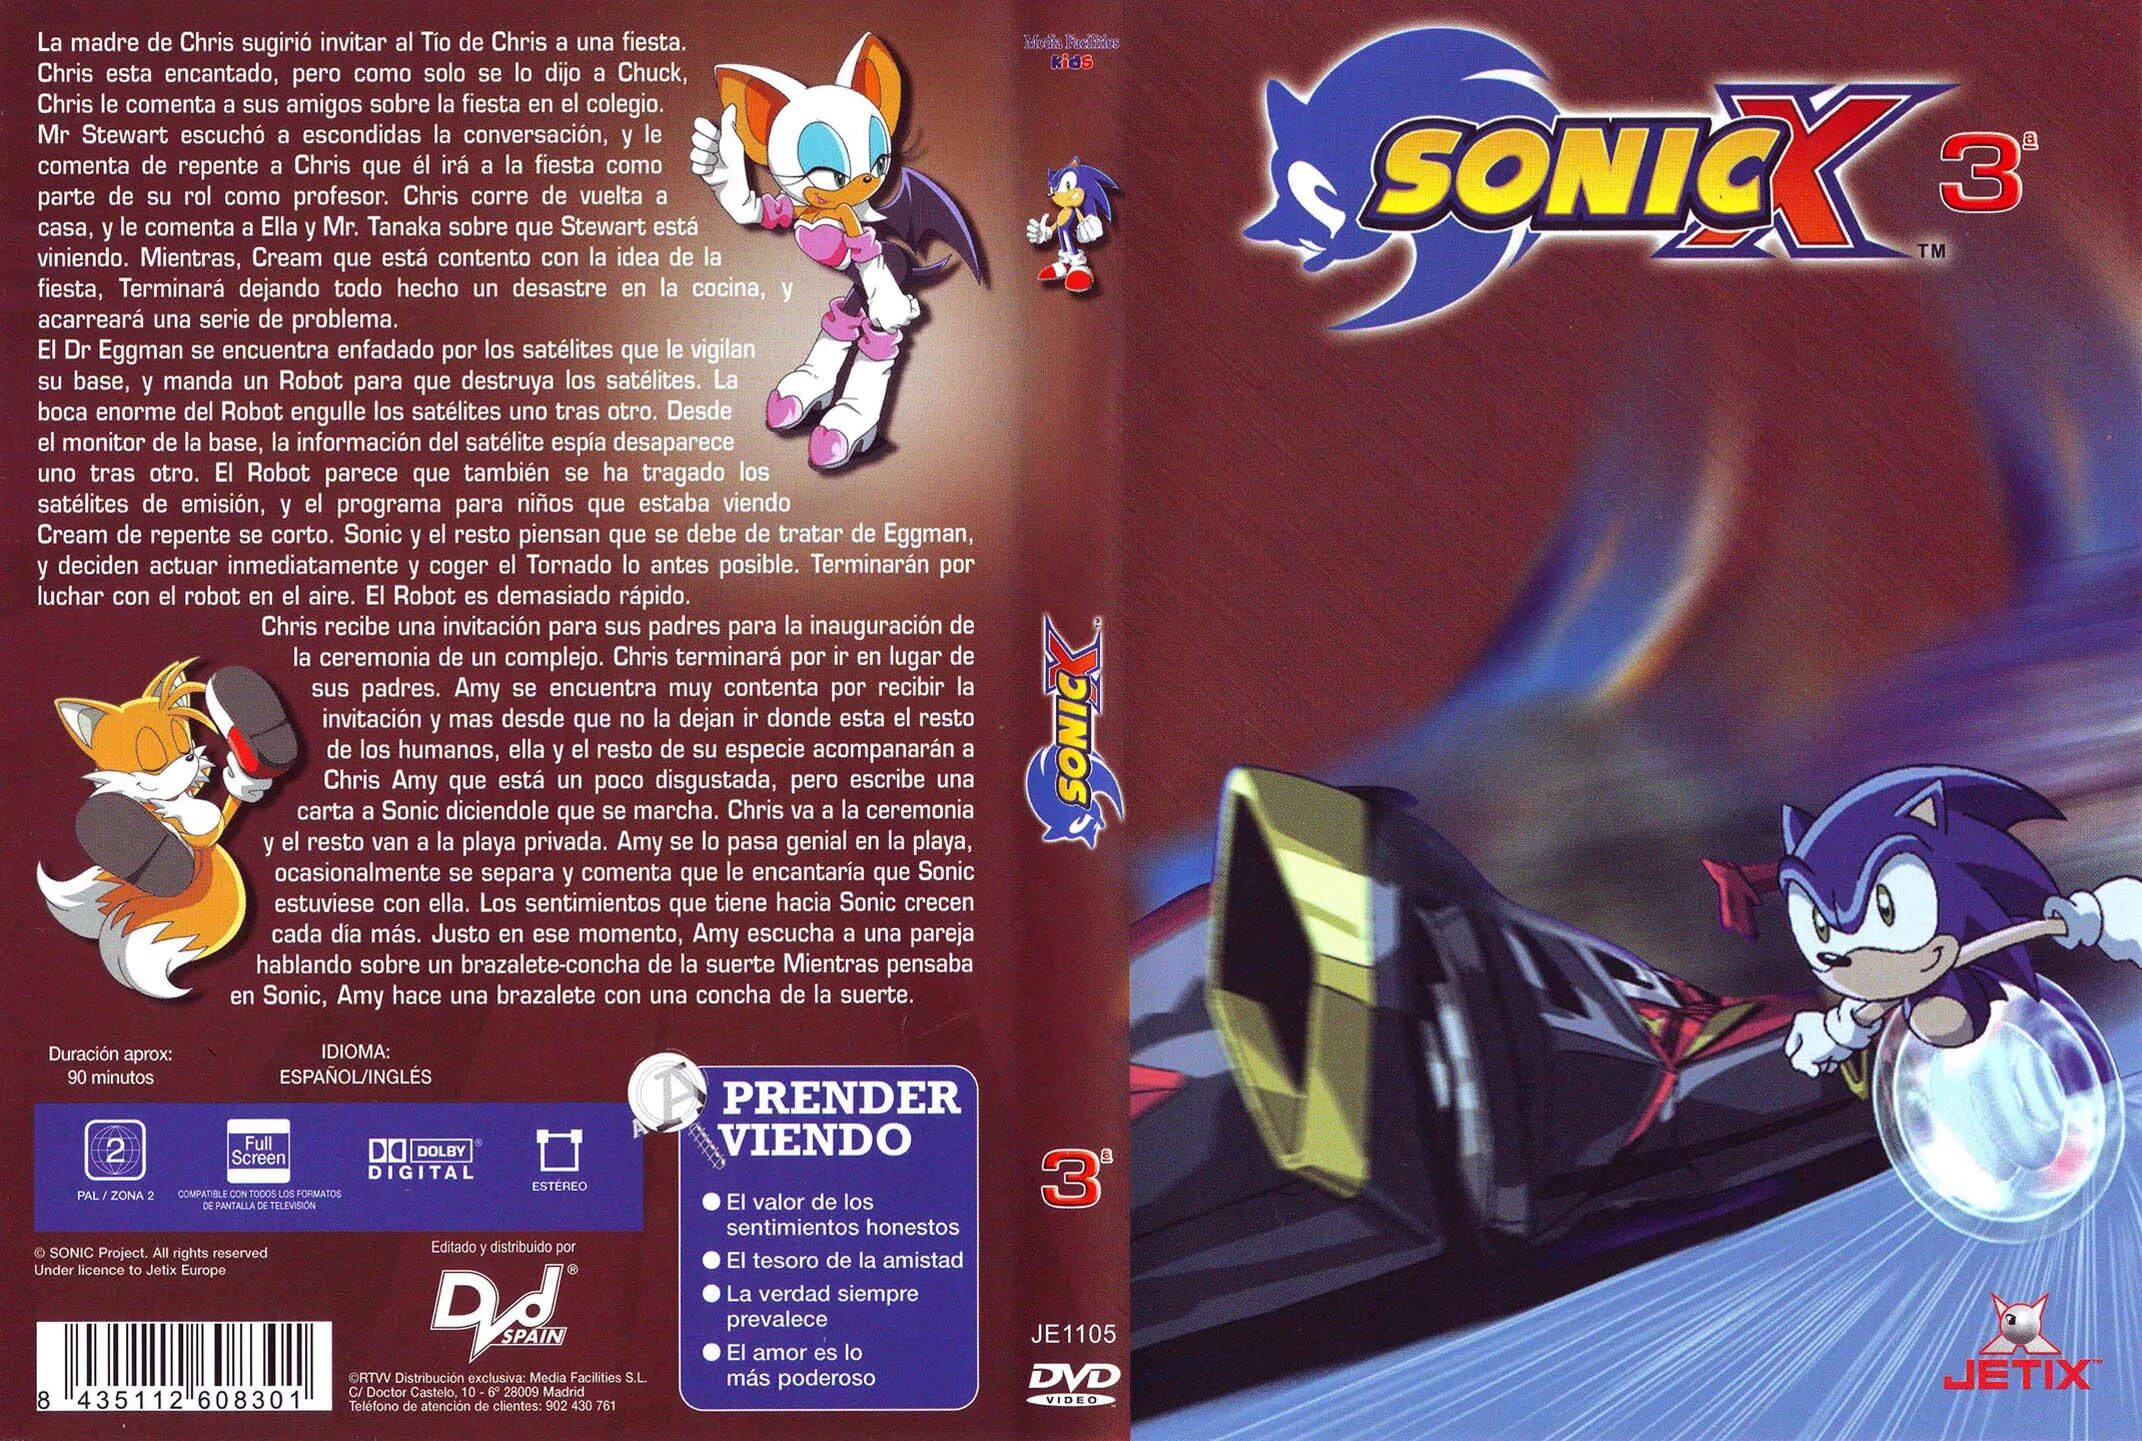 Extra slot sonic 3 air. Sonic x-1-двд. Sonic x Торнадо. Sonic x DVD. Соник (DVD).